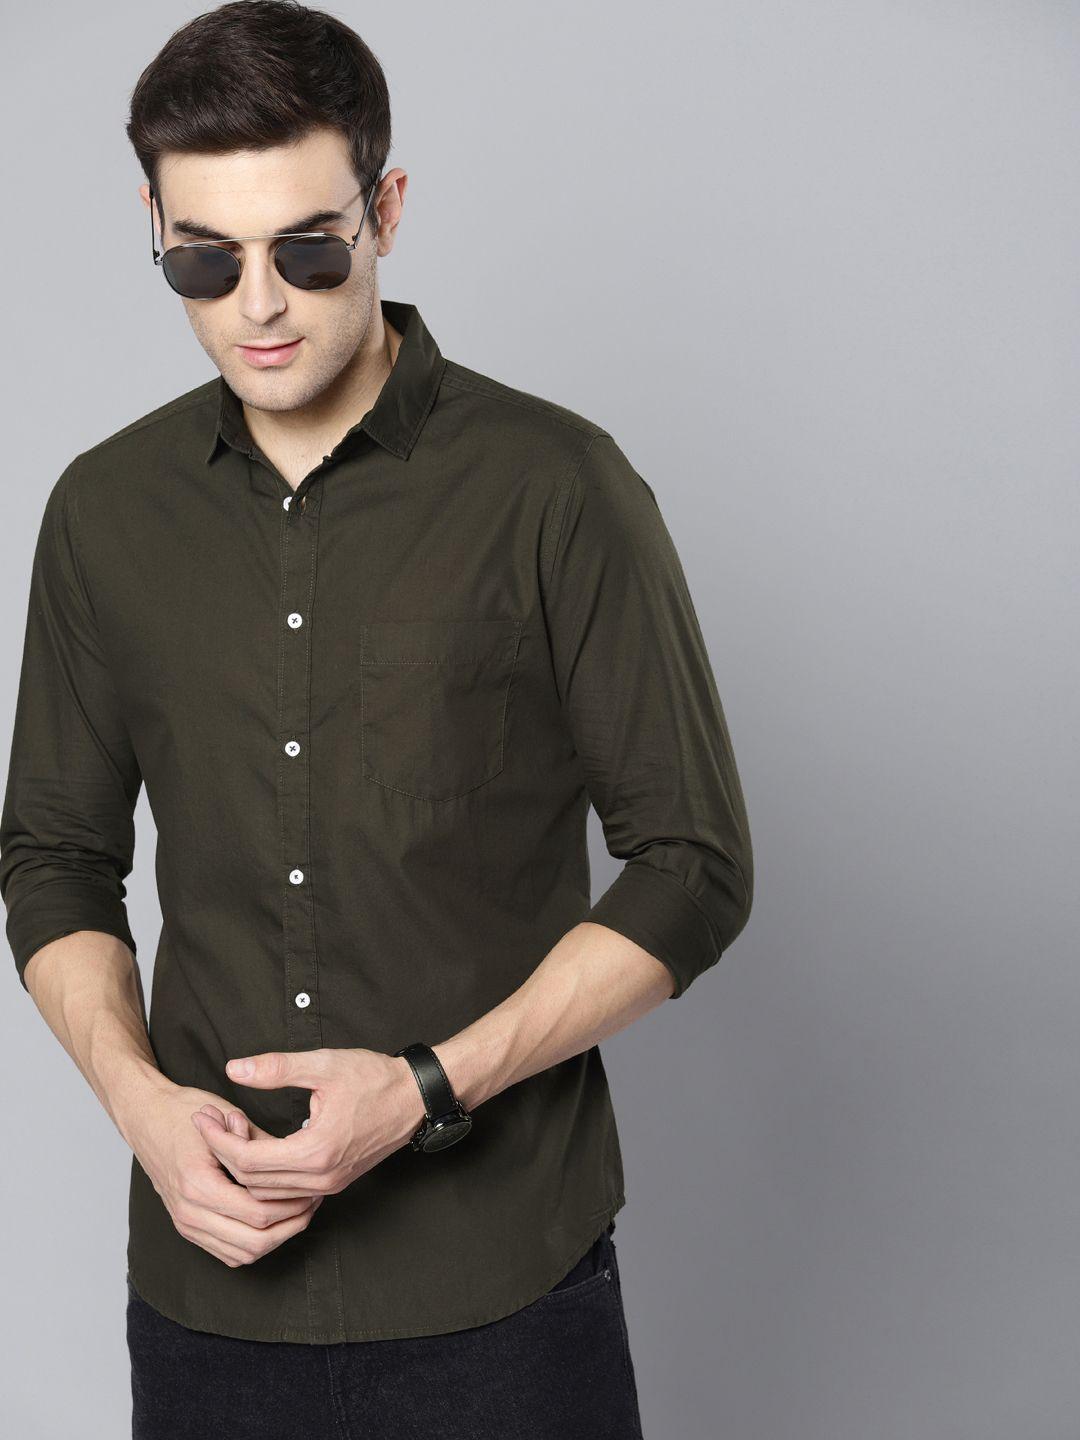 dennis-lingo-men-olive-green-slim-fit-casual-shirt